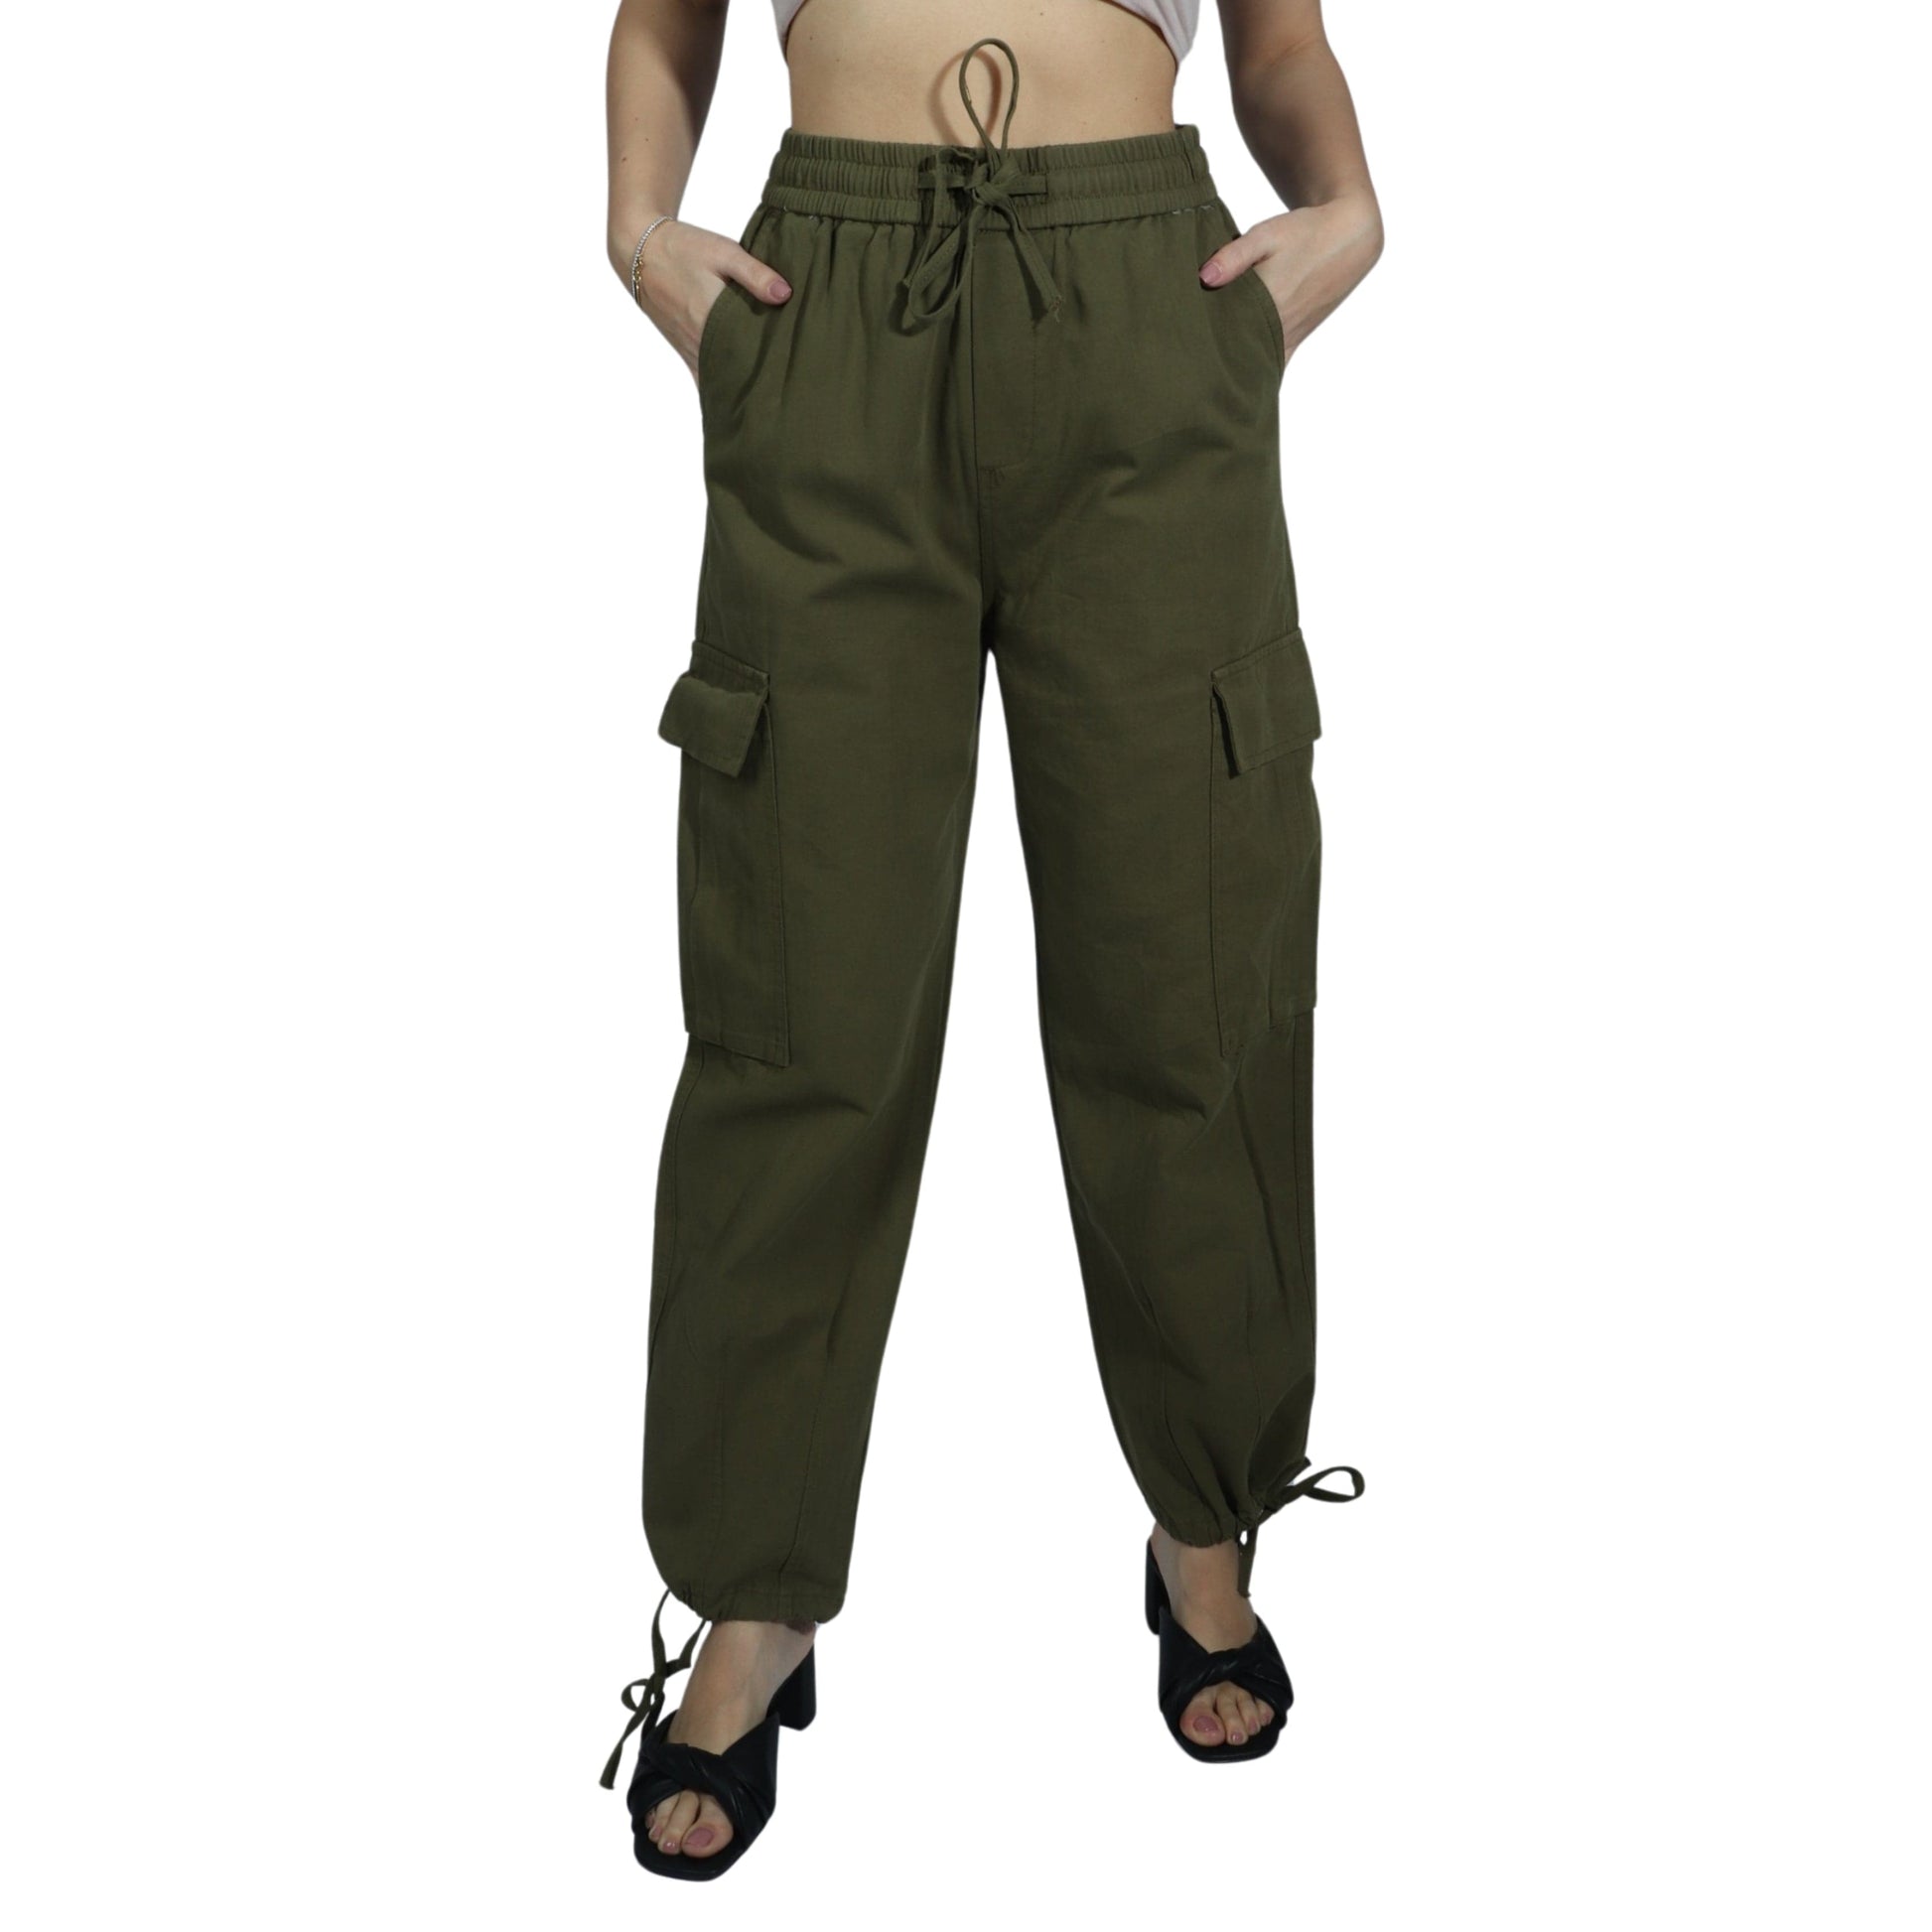 BLACKGTS Womens Bottoms M / Green BLACKGTS - Pull Over Cargo Pants